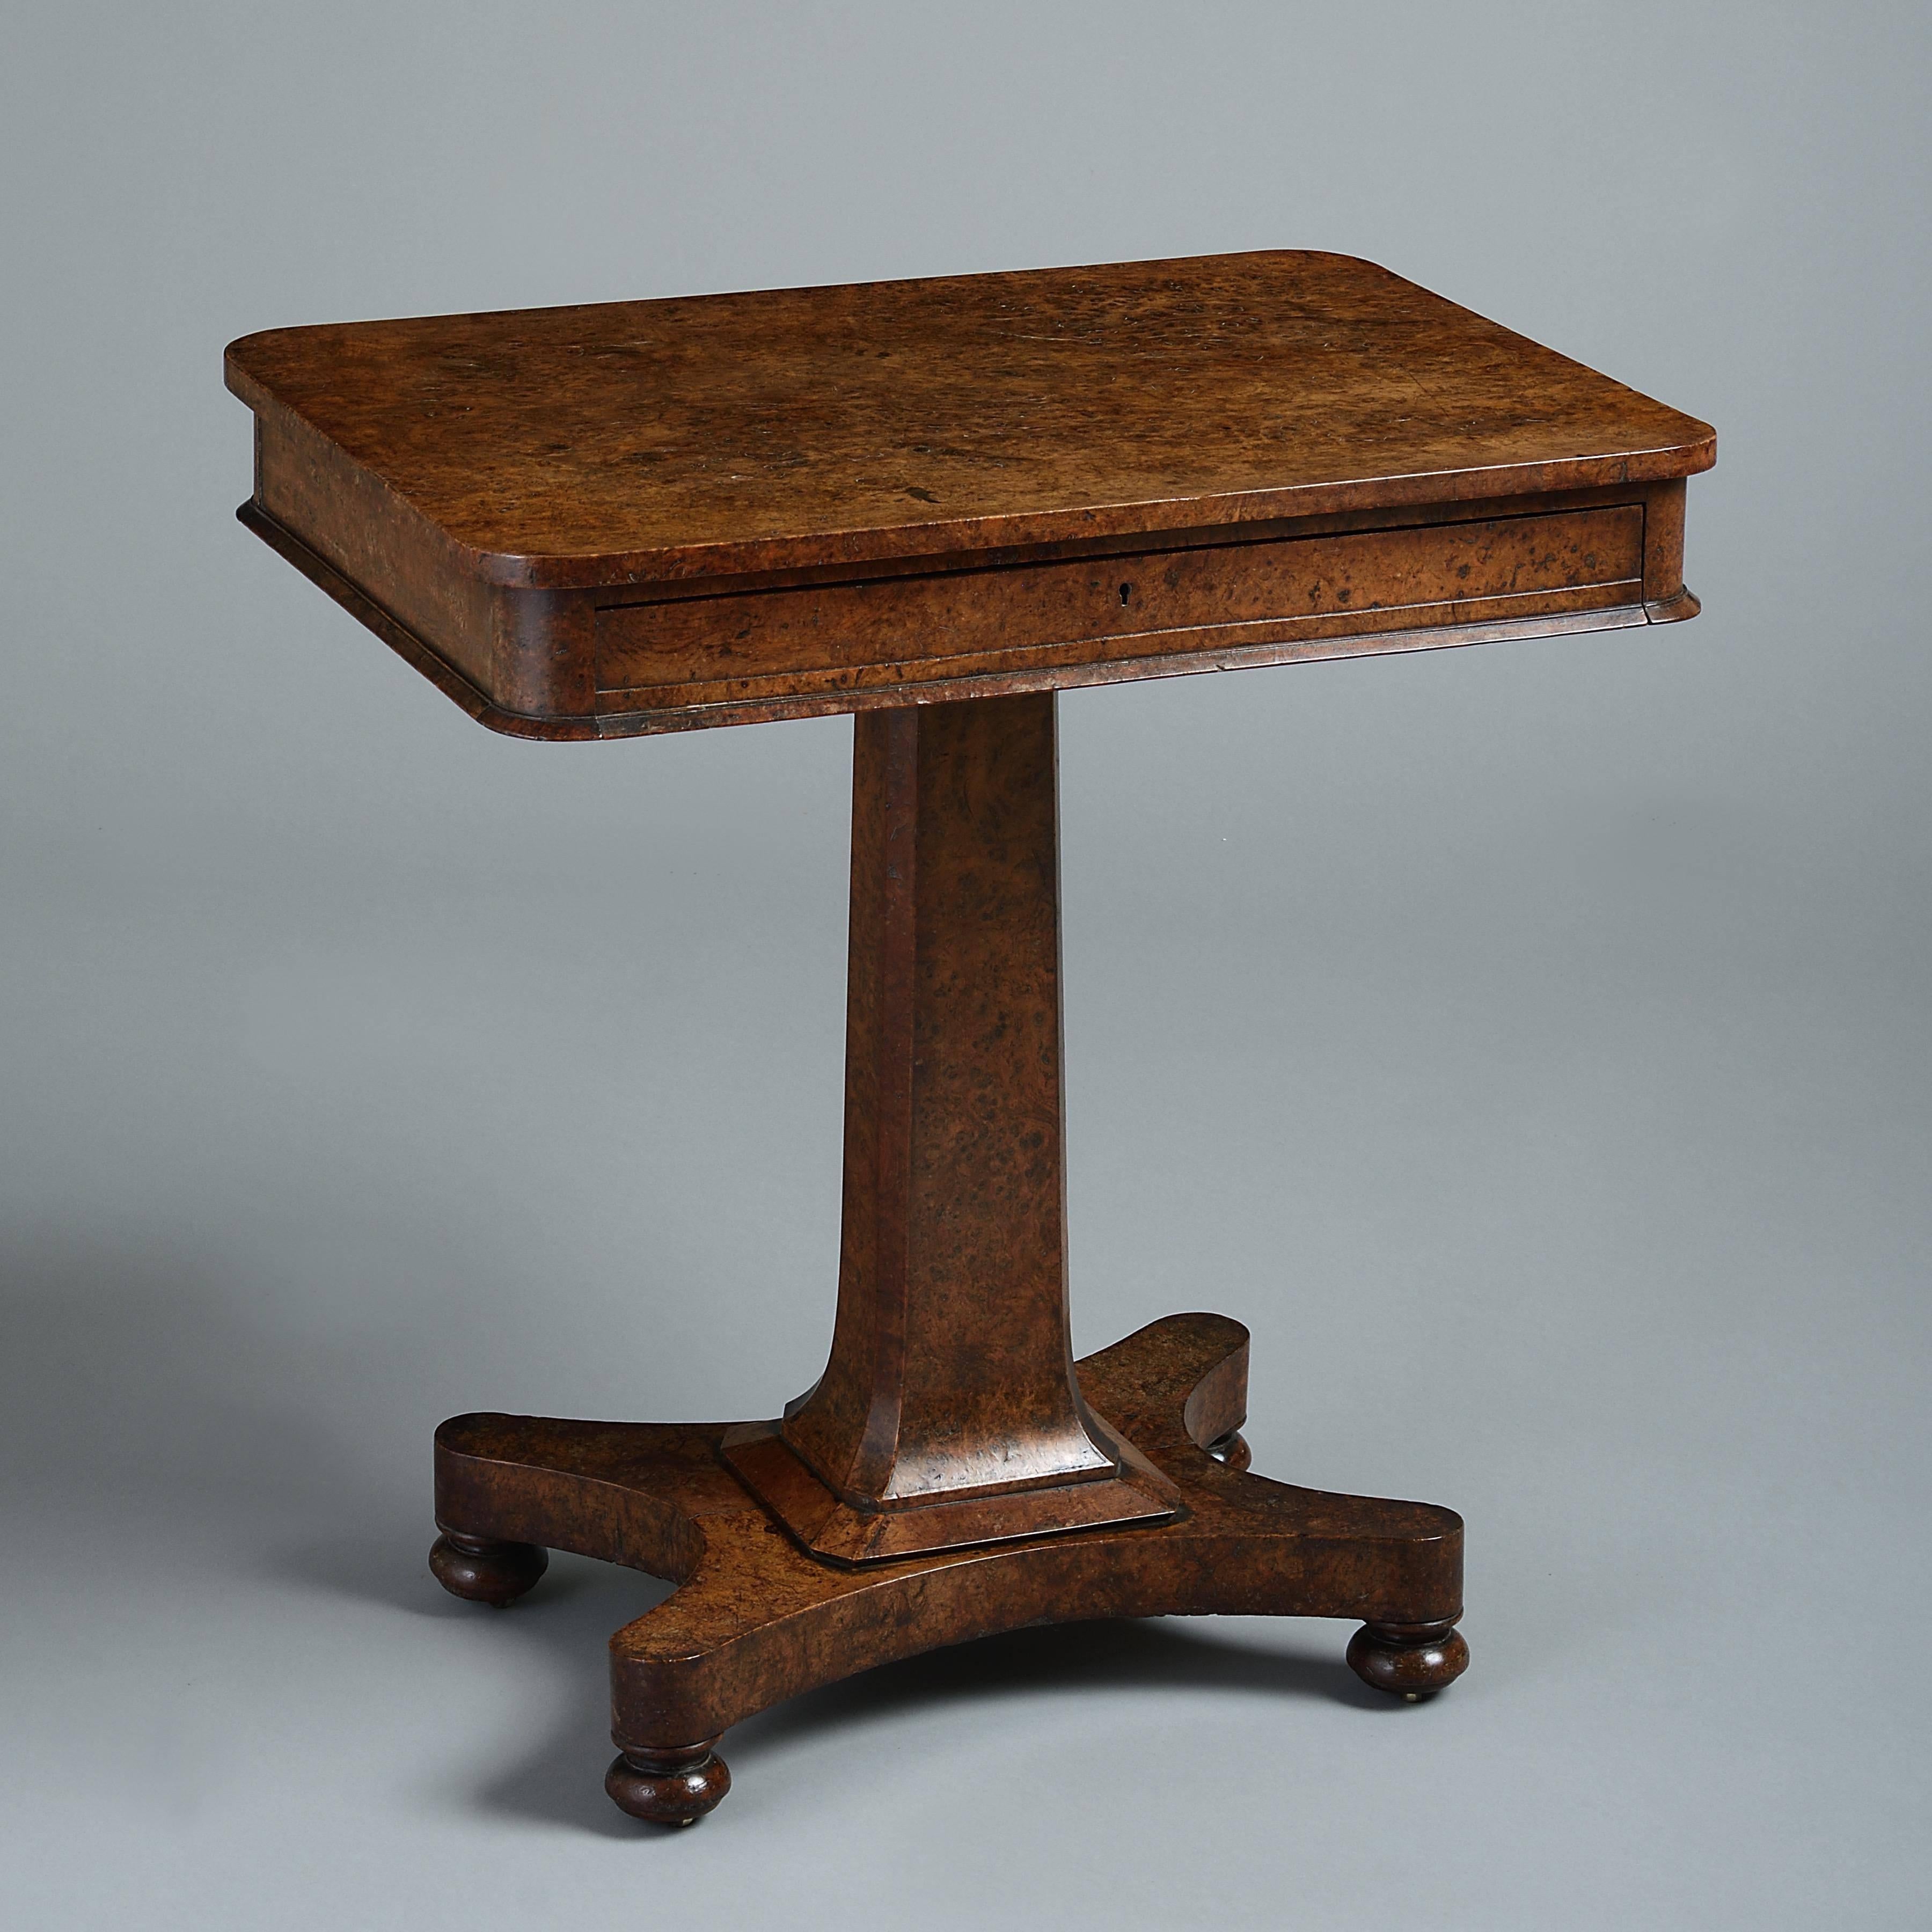 A George IV pollard oak pedestal side table with frieze drawer, circa 1825.